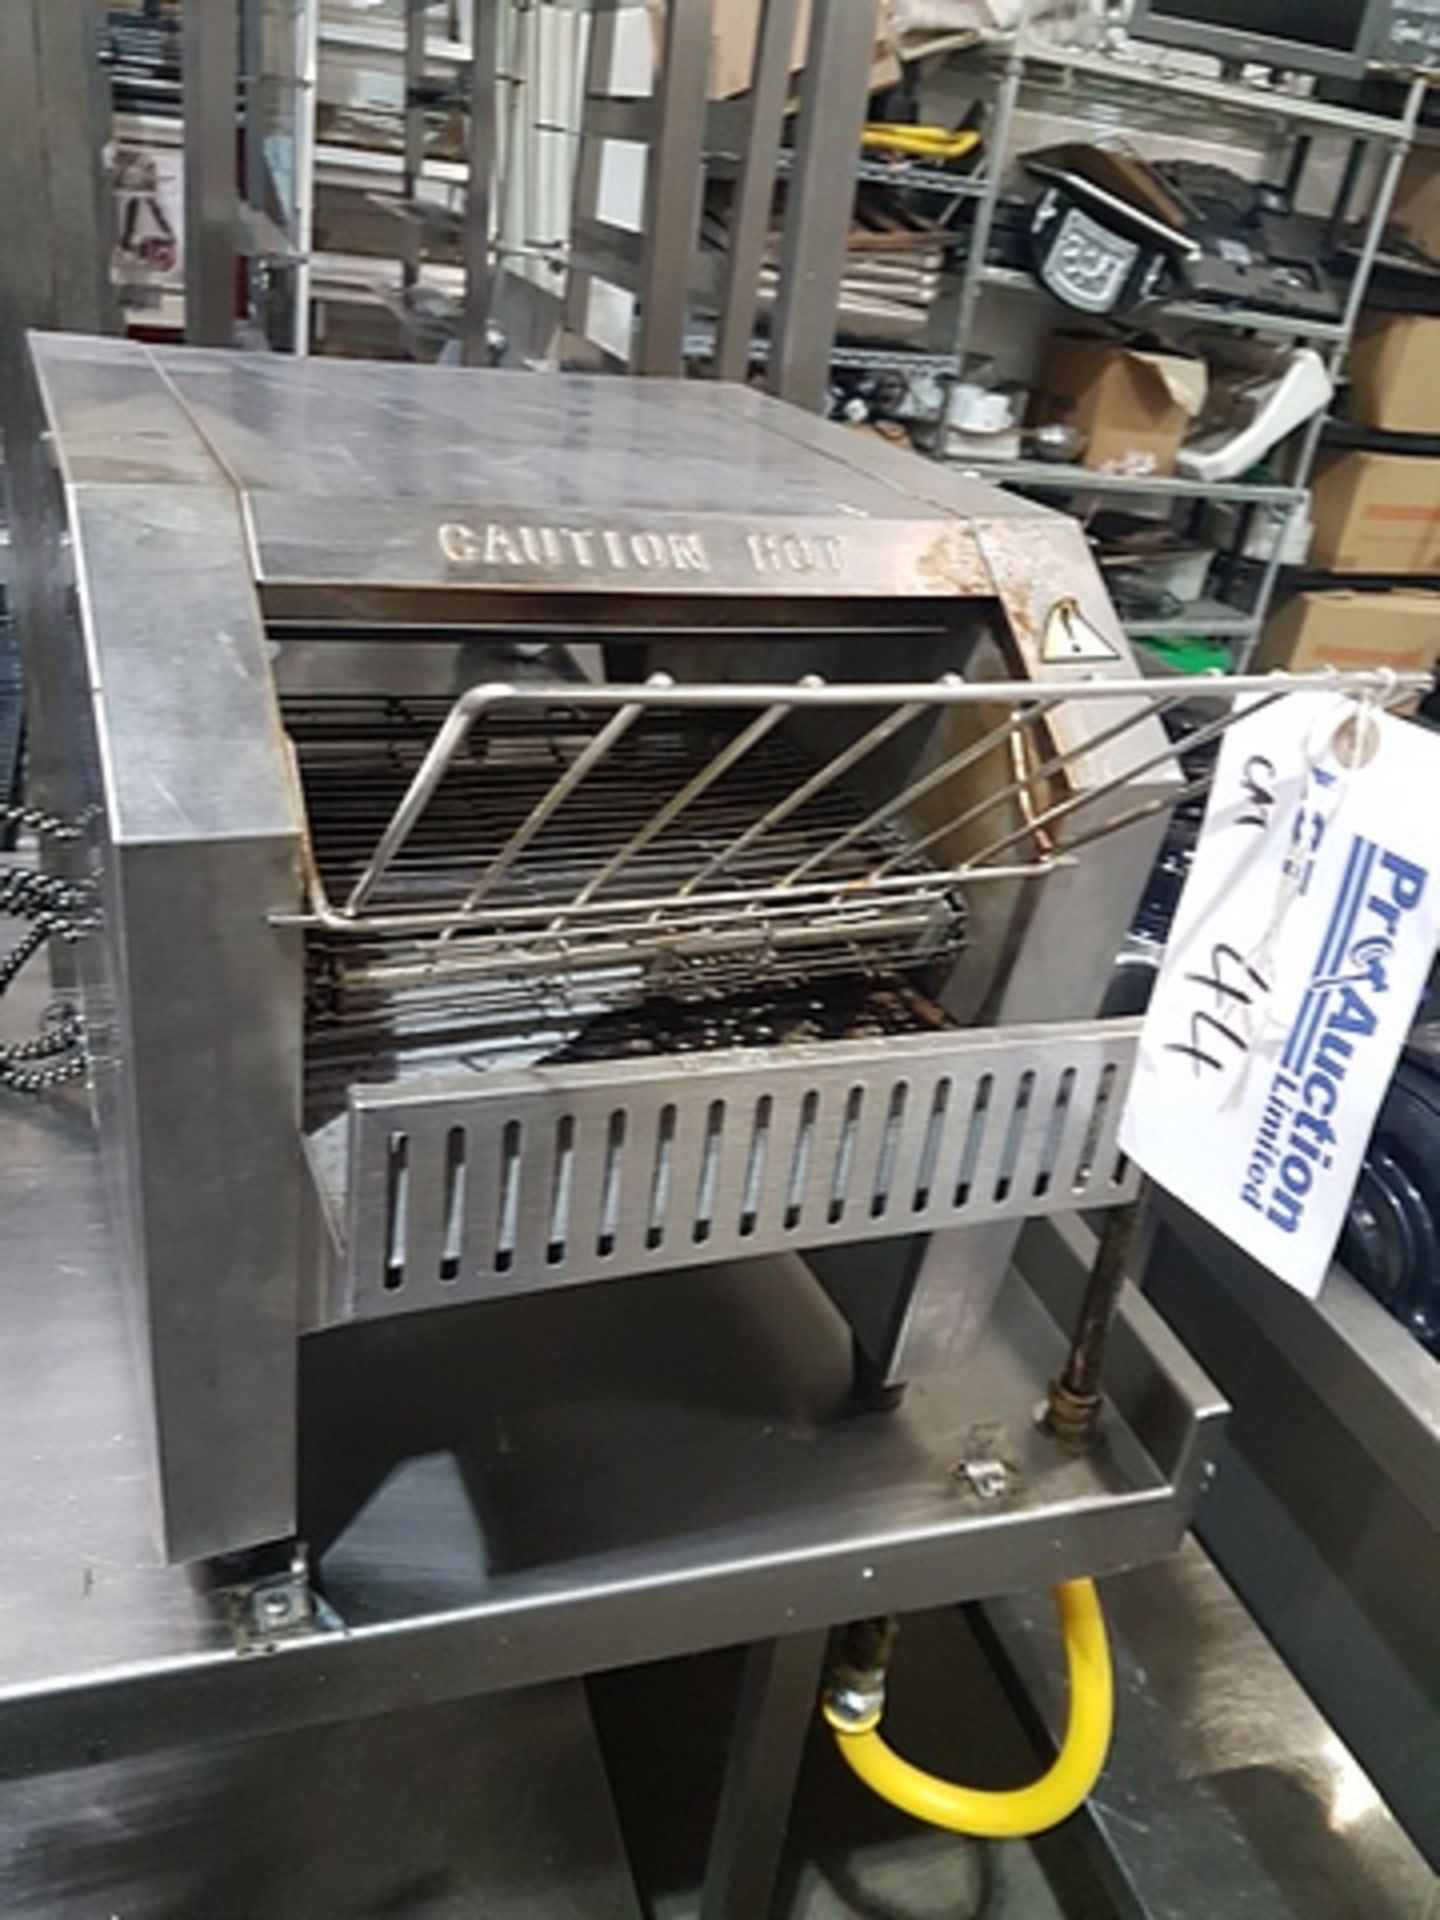 Burco conveyor toaster SN 444448554 240v